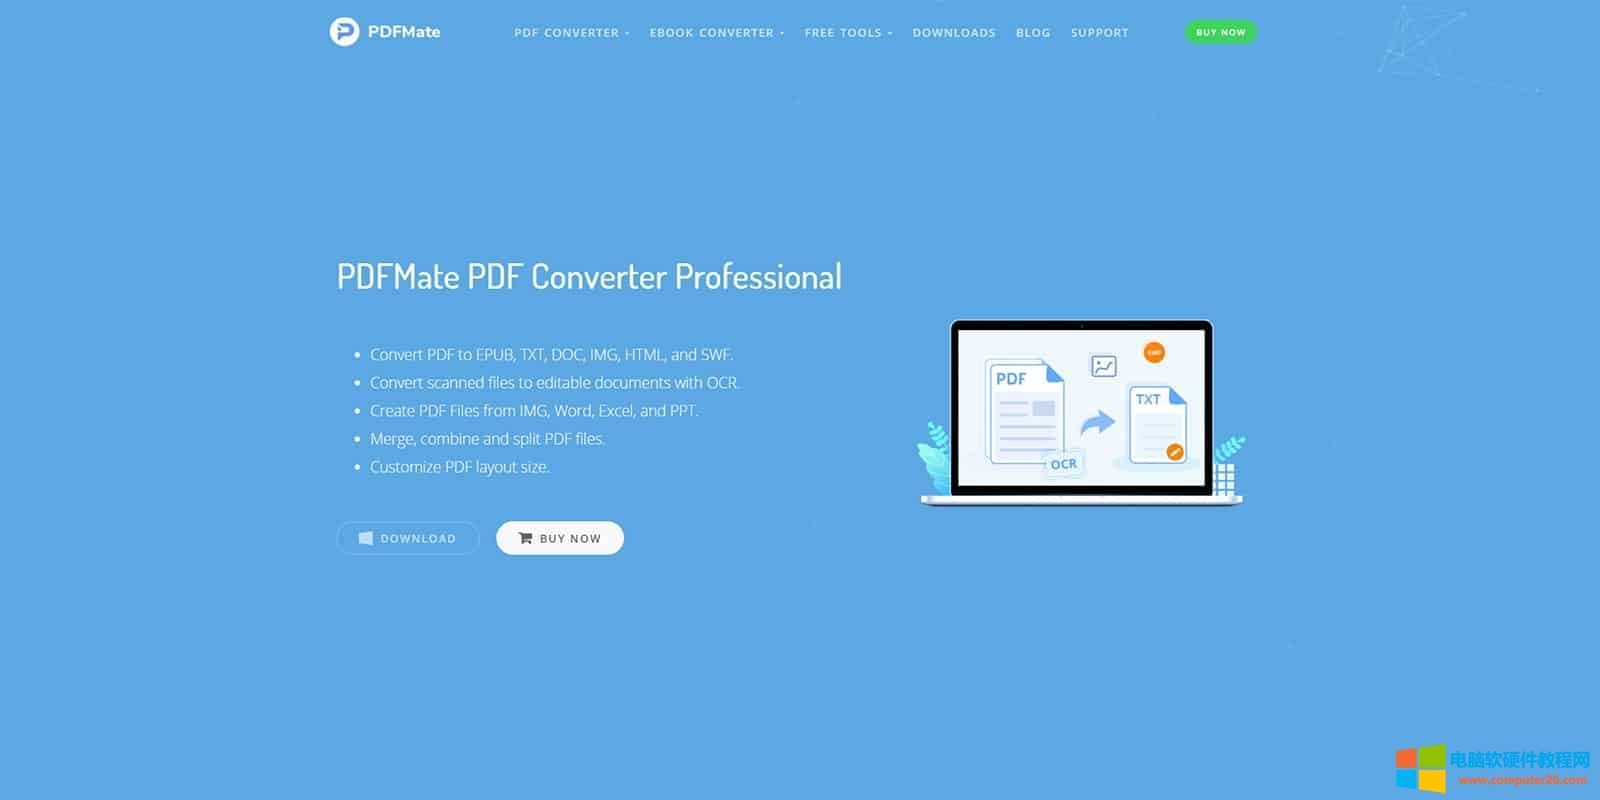 PDFmate Converter Pro